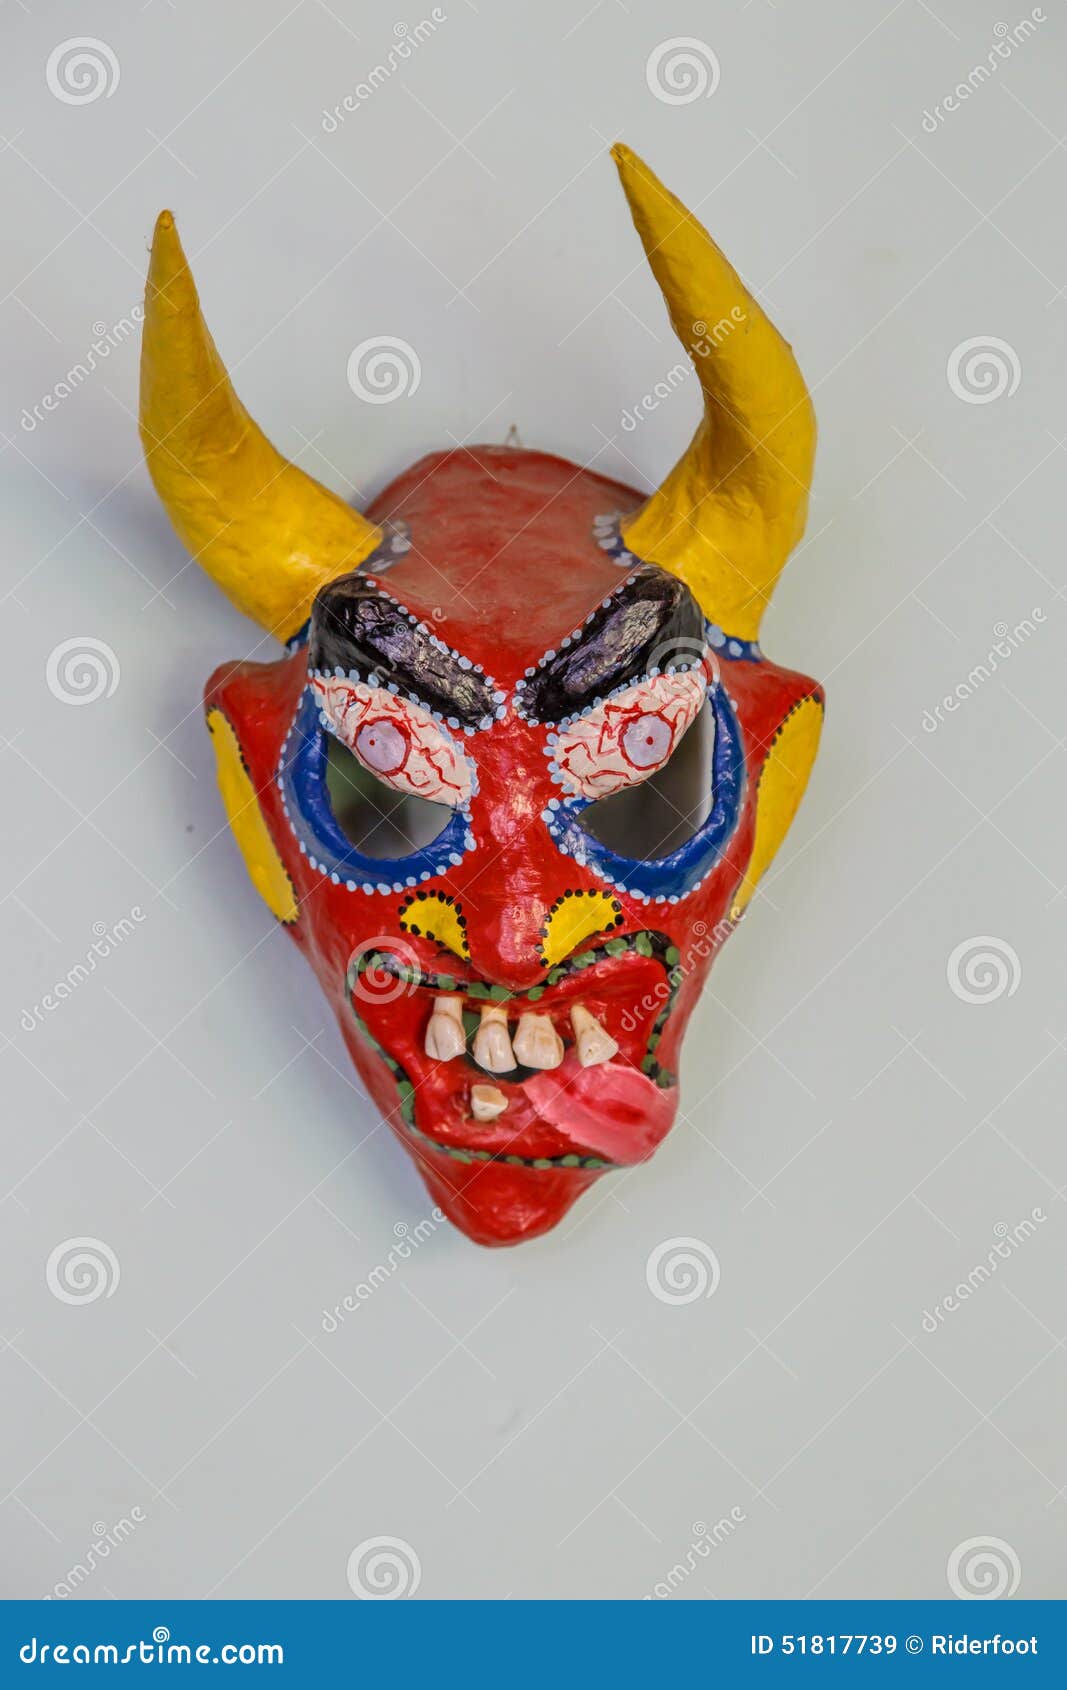 demon handmade mask from republica dominicana